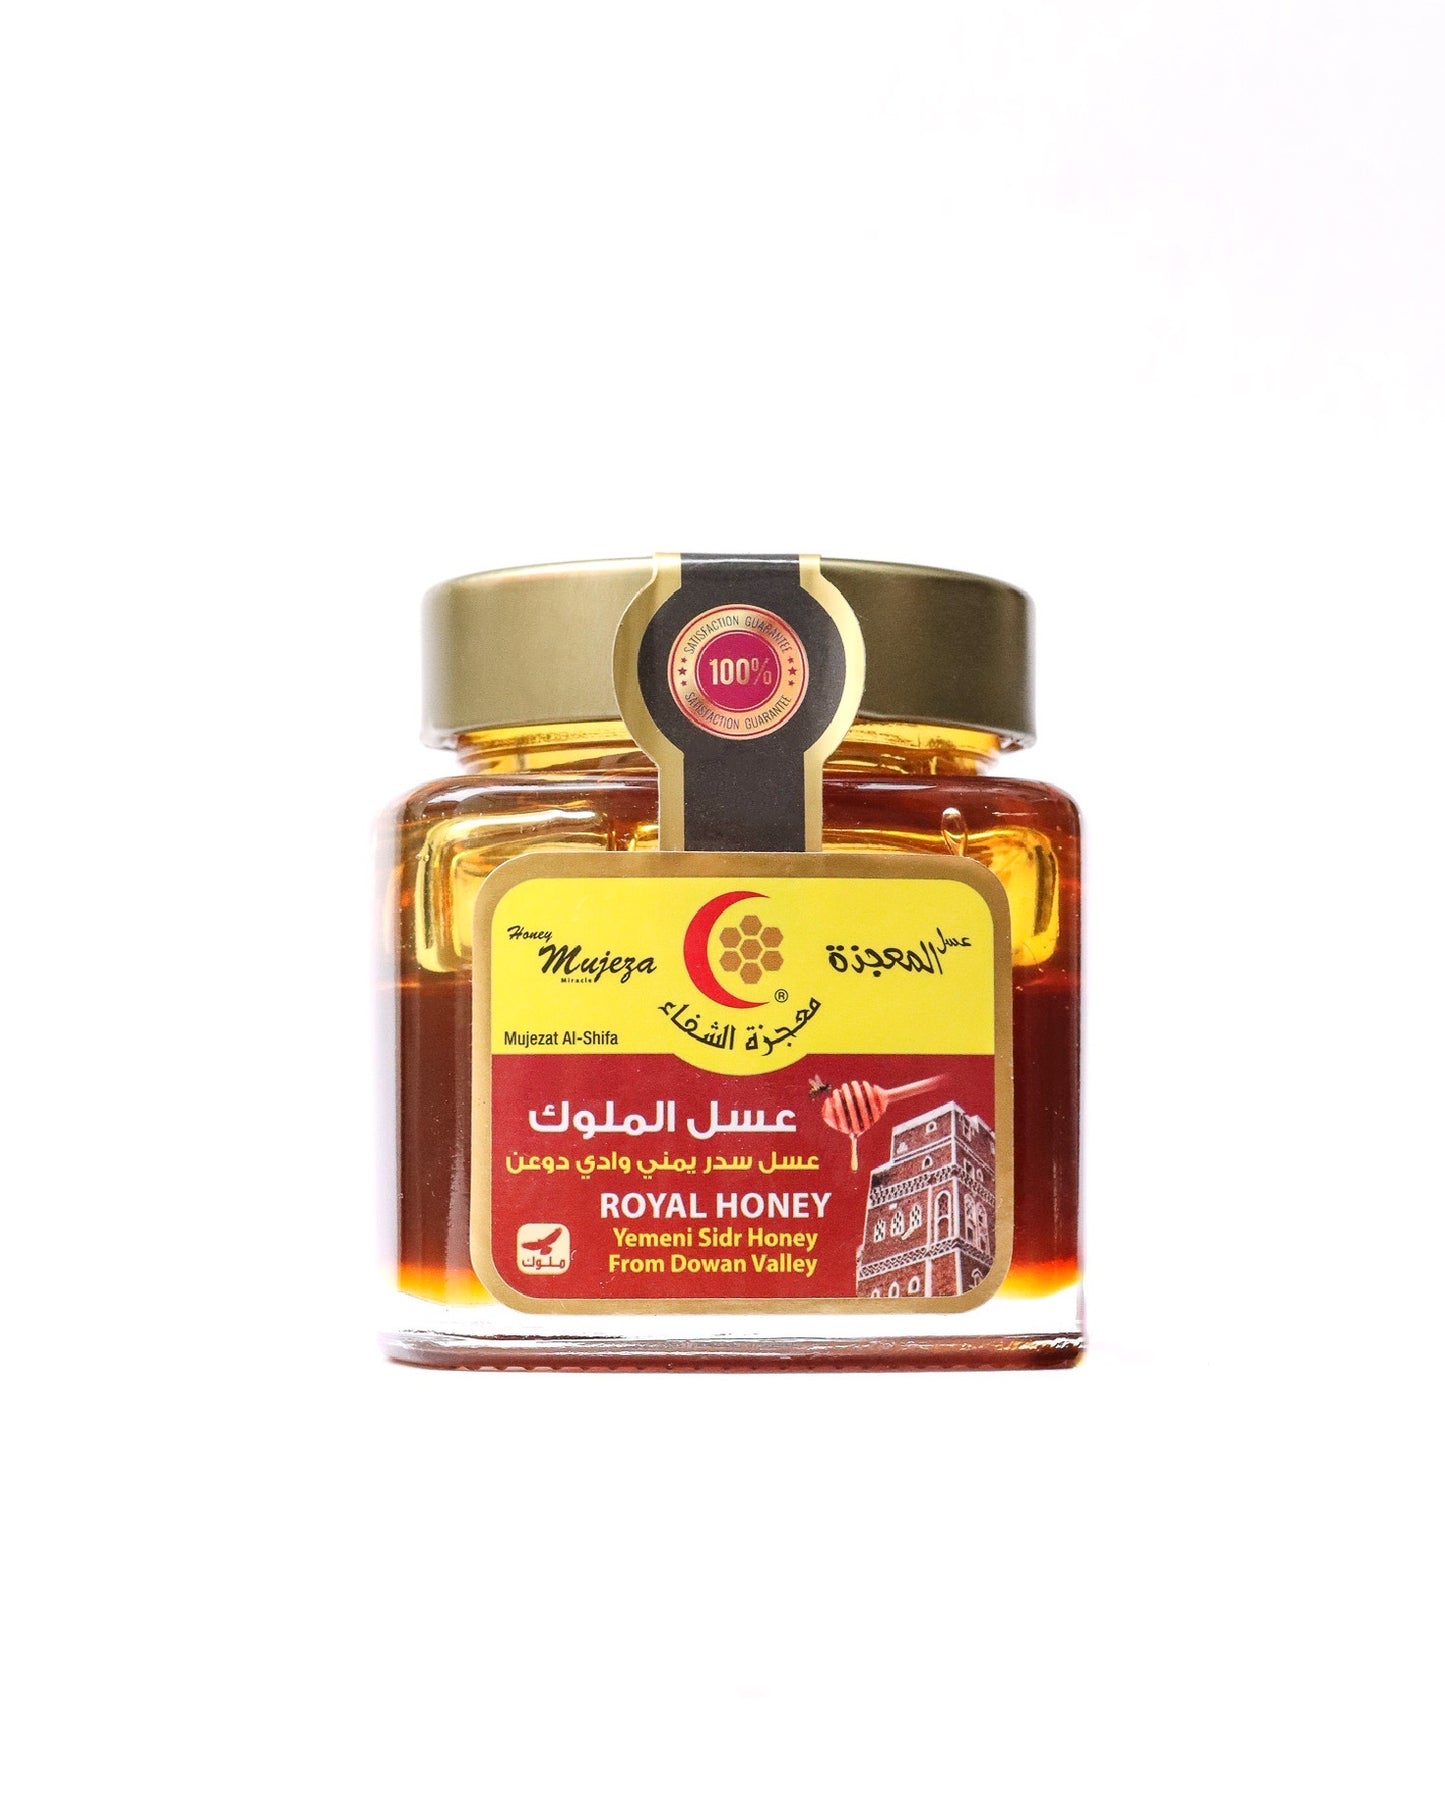 Yemeni Royal Sidr Honey (Douan Valley) (250g) - Mujeza Honey